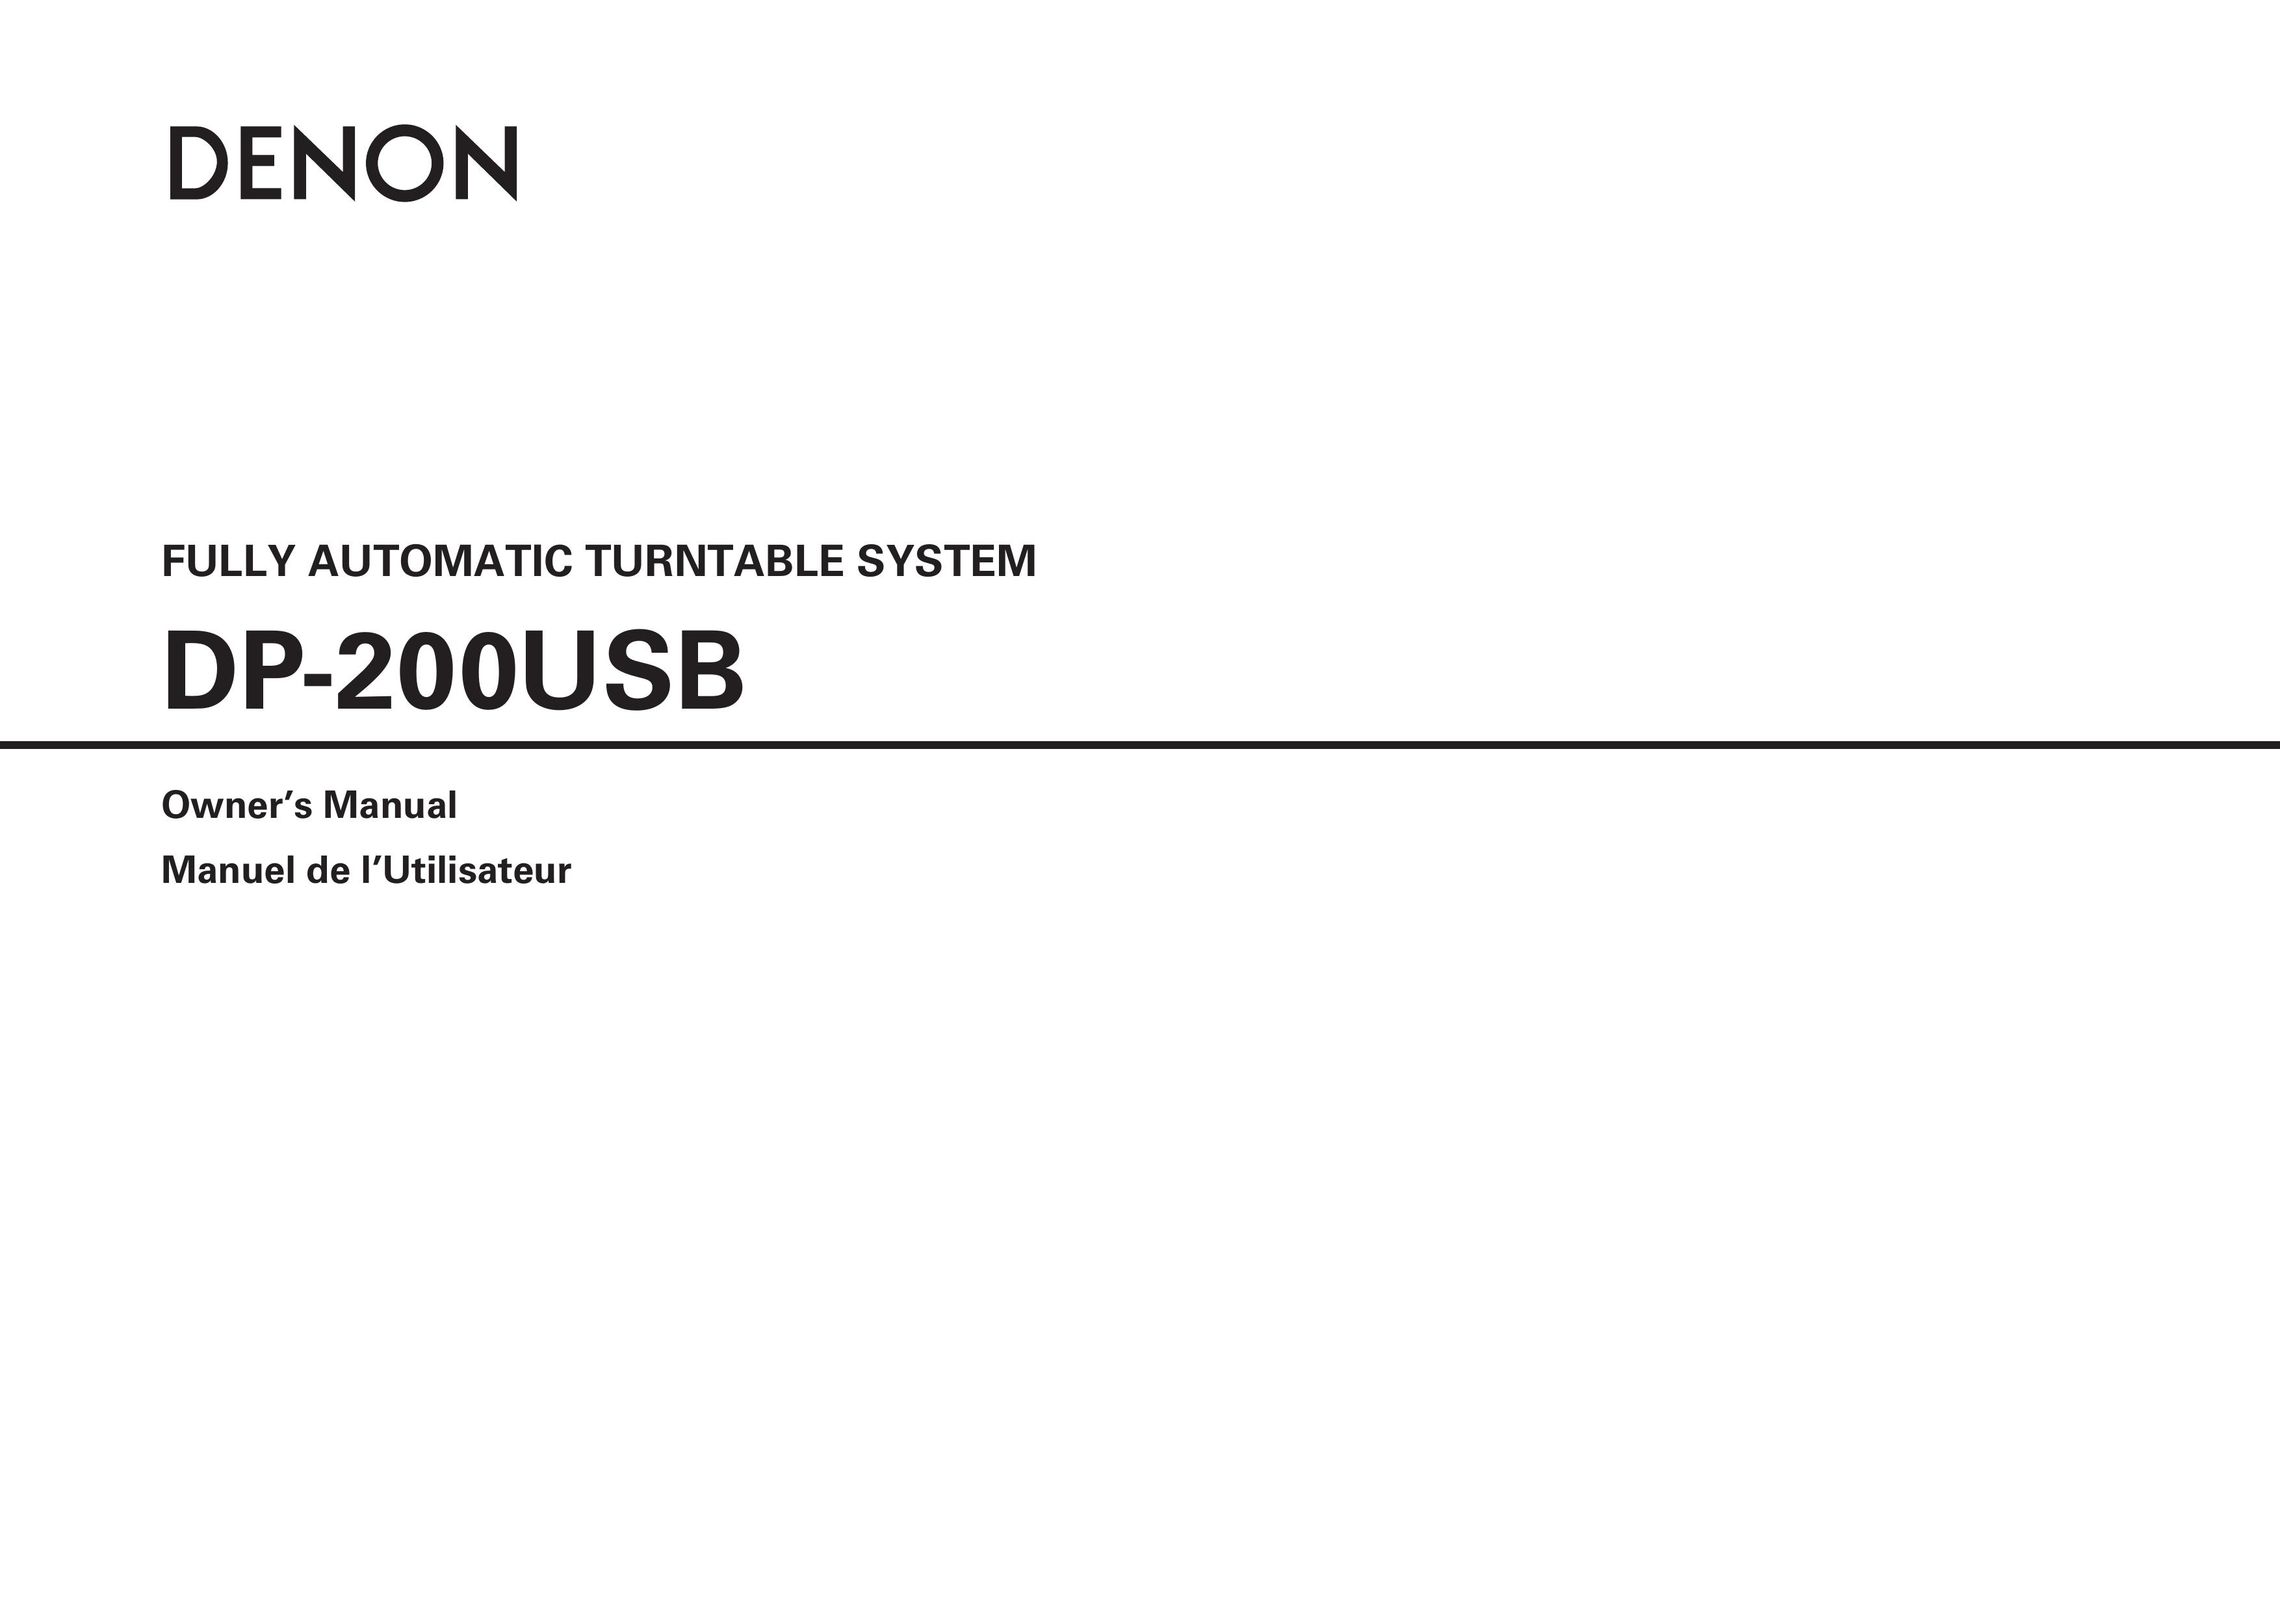 Denon DP200USB Turntable User Manual